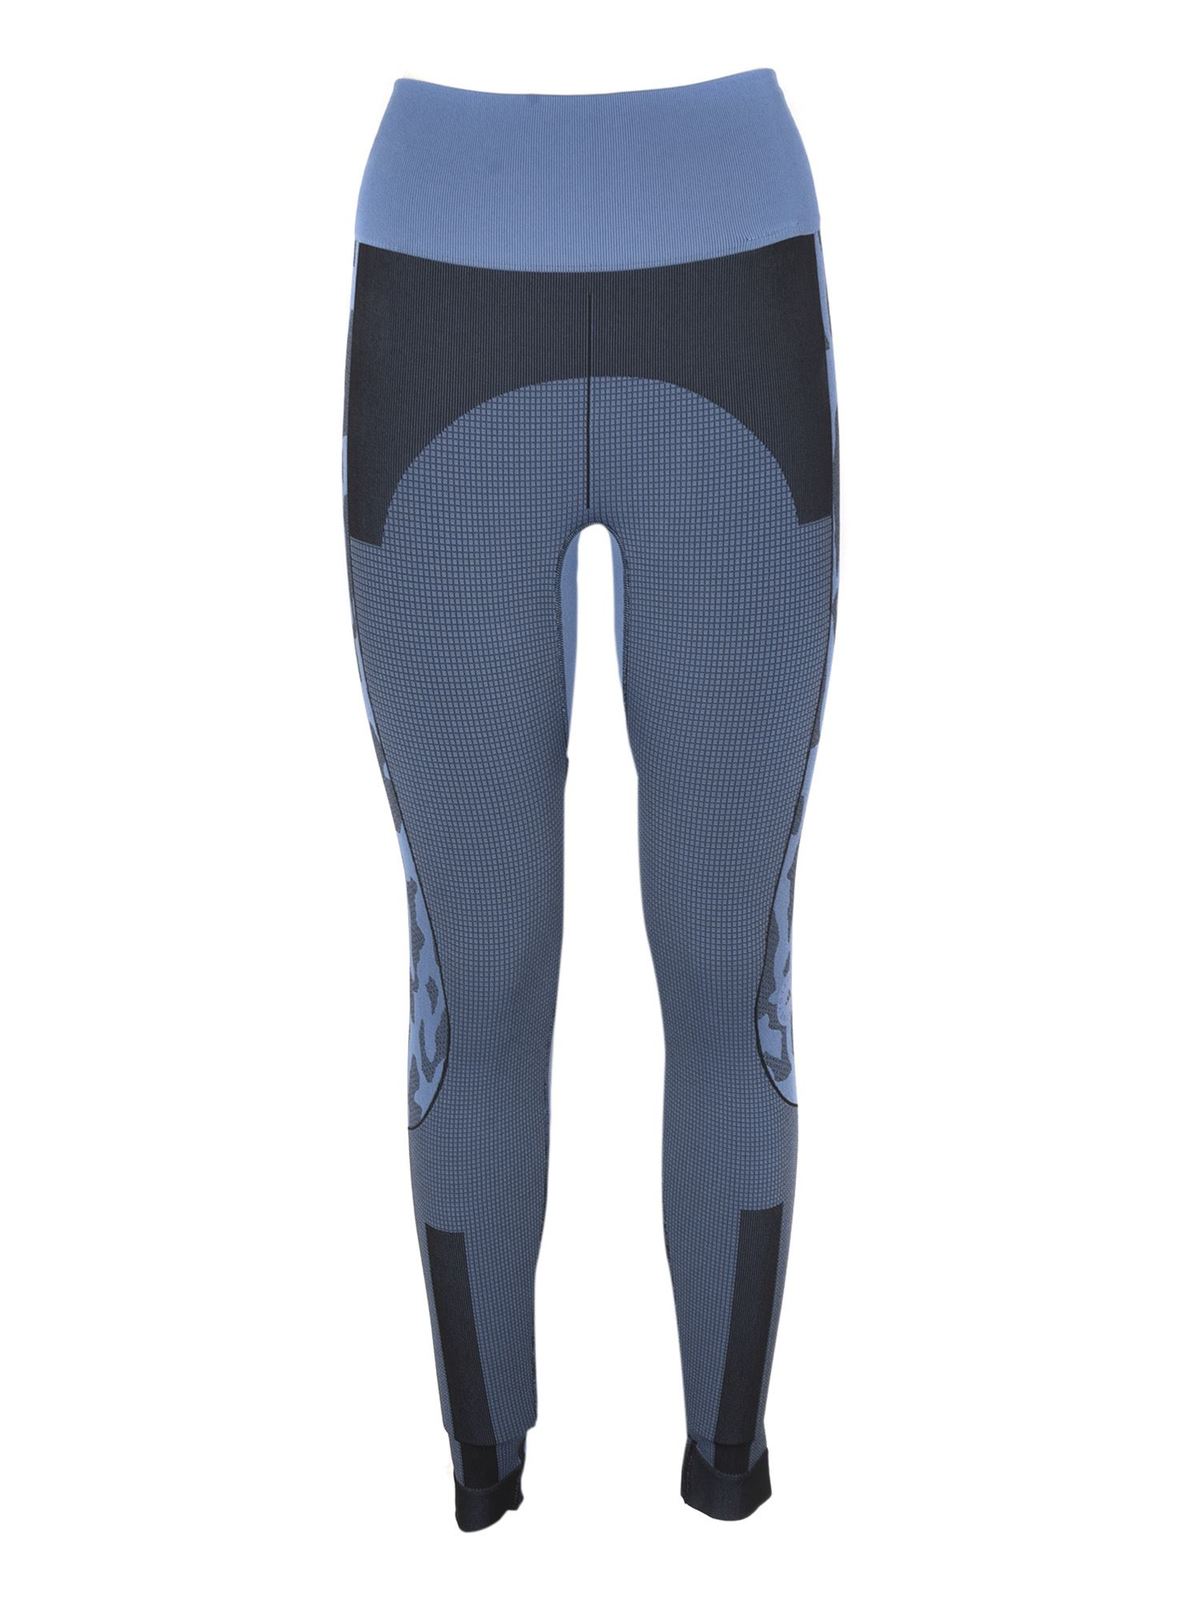 Leggings Adidas by Stella McCartney - Truepurpose leggings in blue and  light blue - GL7584